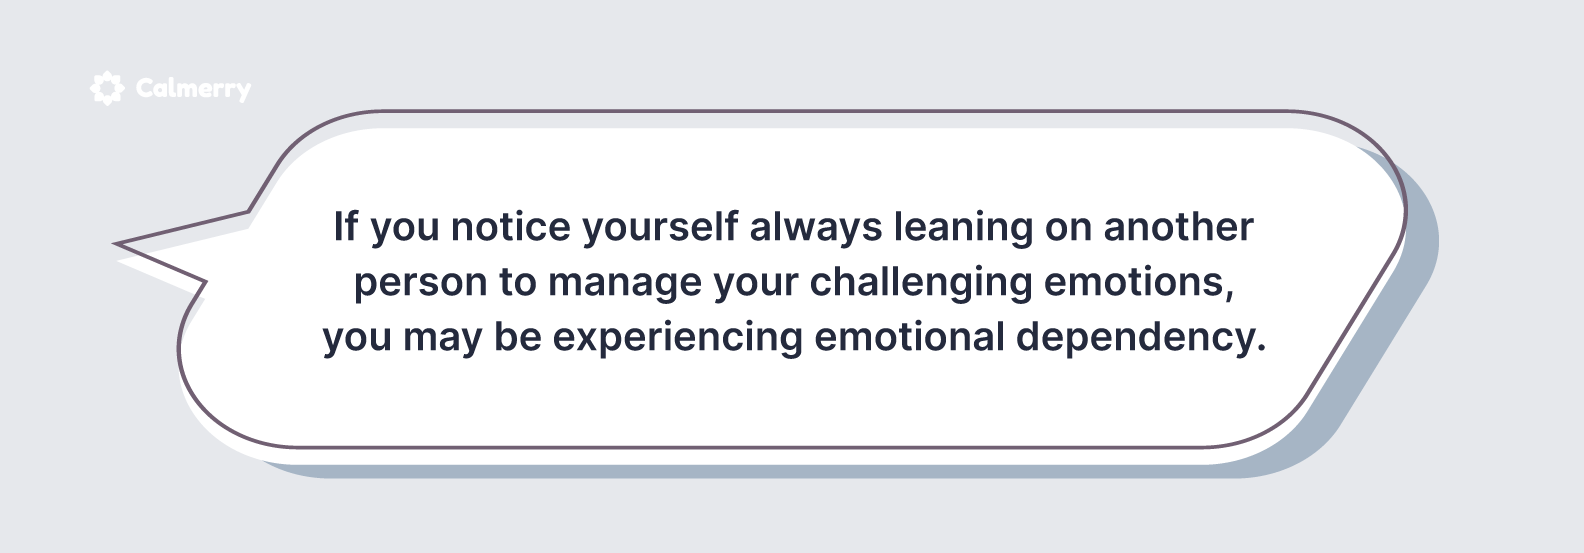 emotional dependency managing emotions